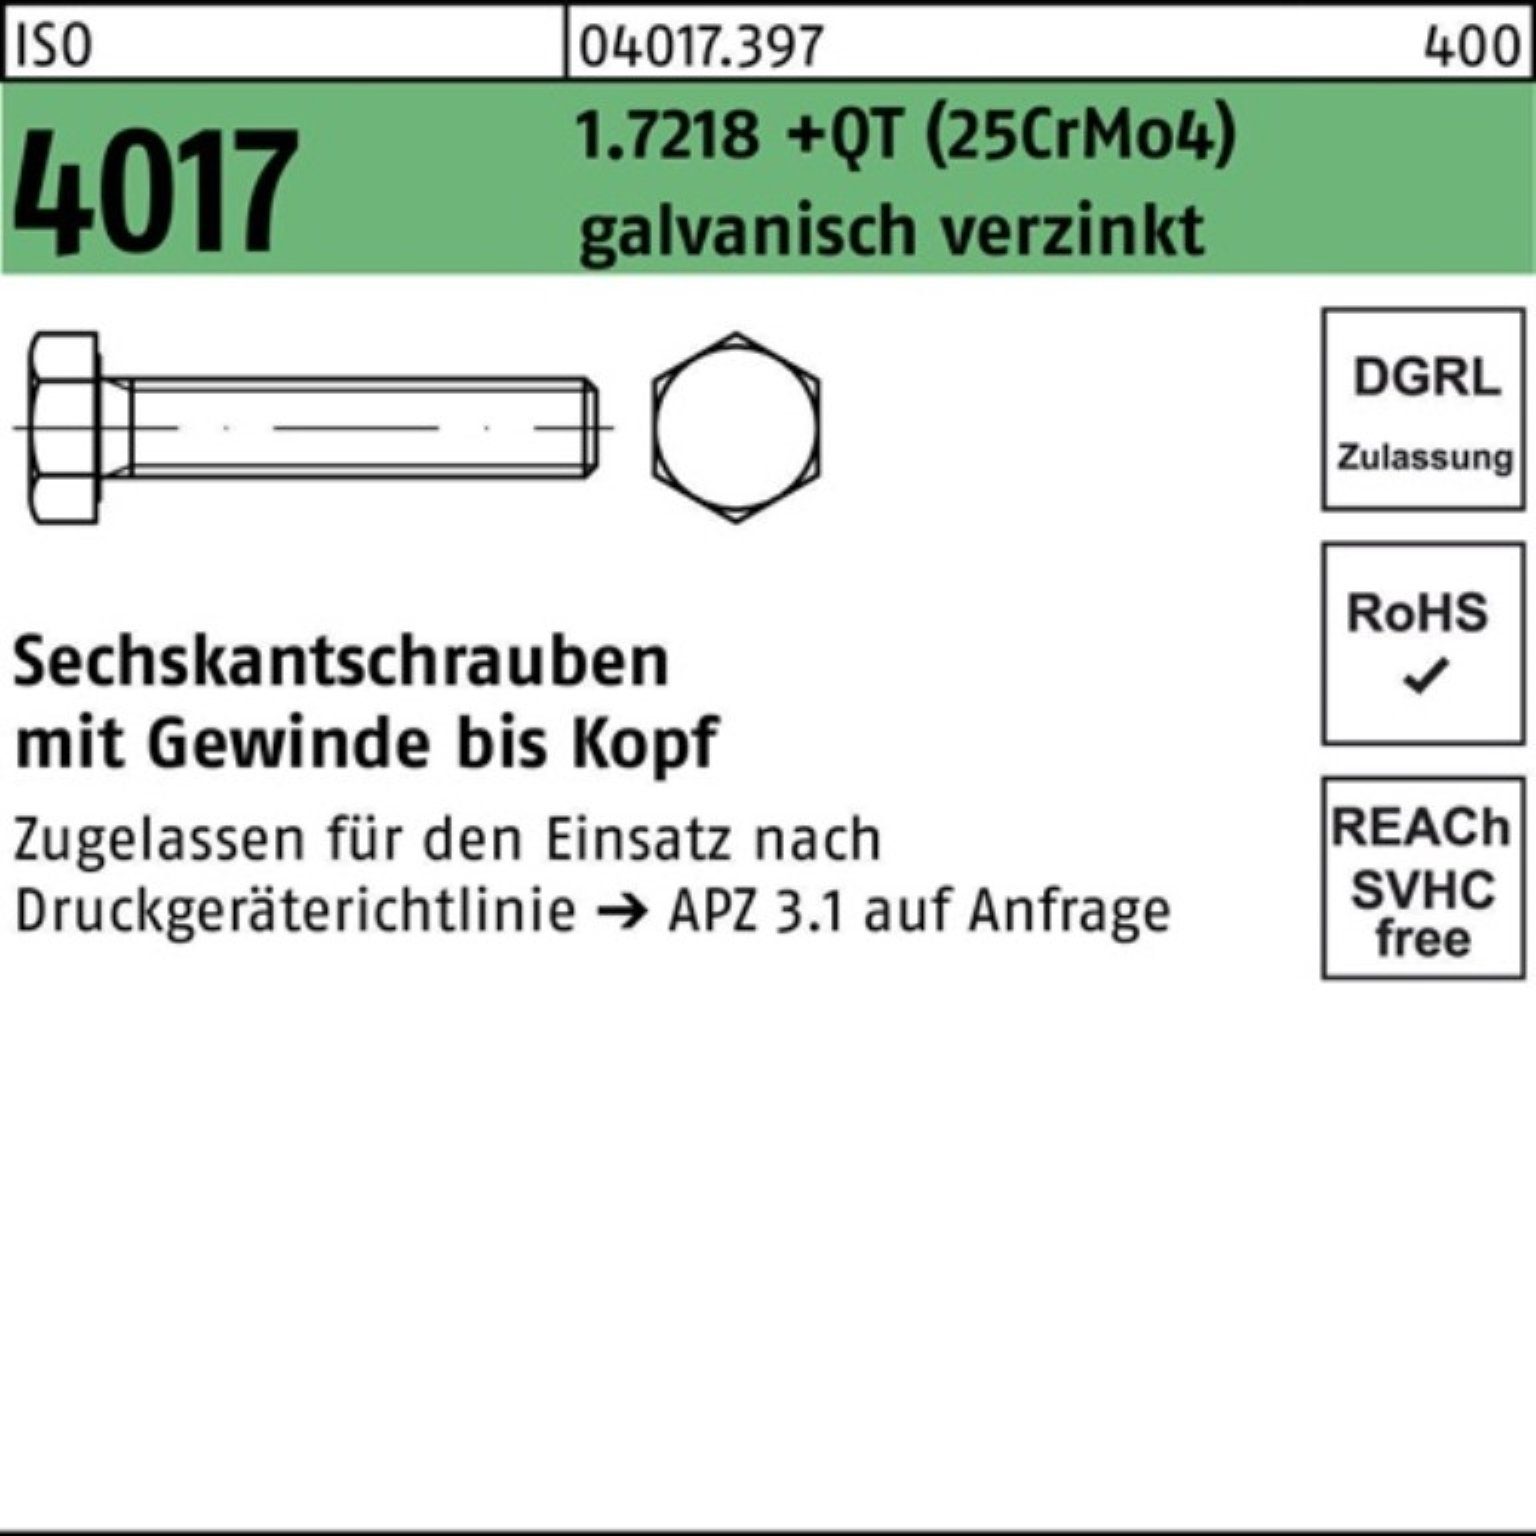 VG Bufab Sechskantschraube g 100er M20x60 (25CrMo4) ISO 1.7218 +QT Pack 4017 Sechskantschraube